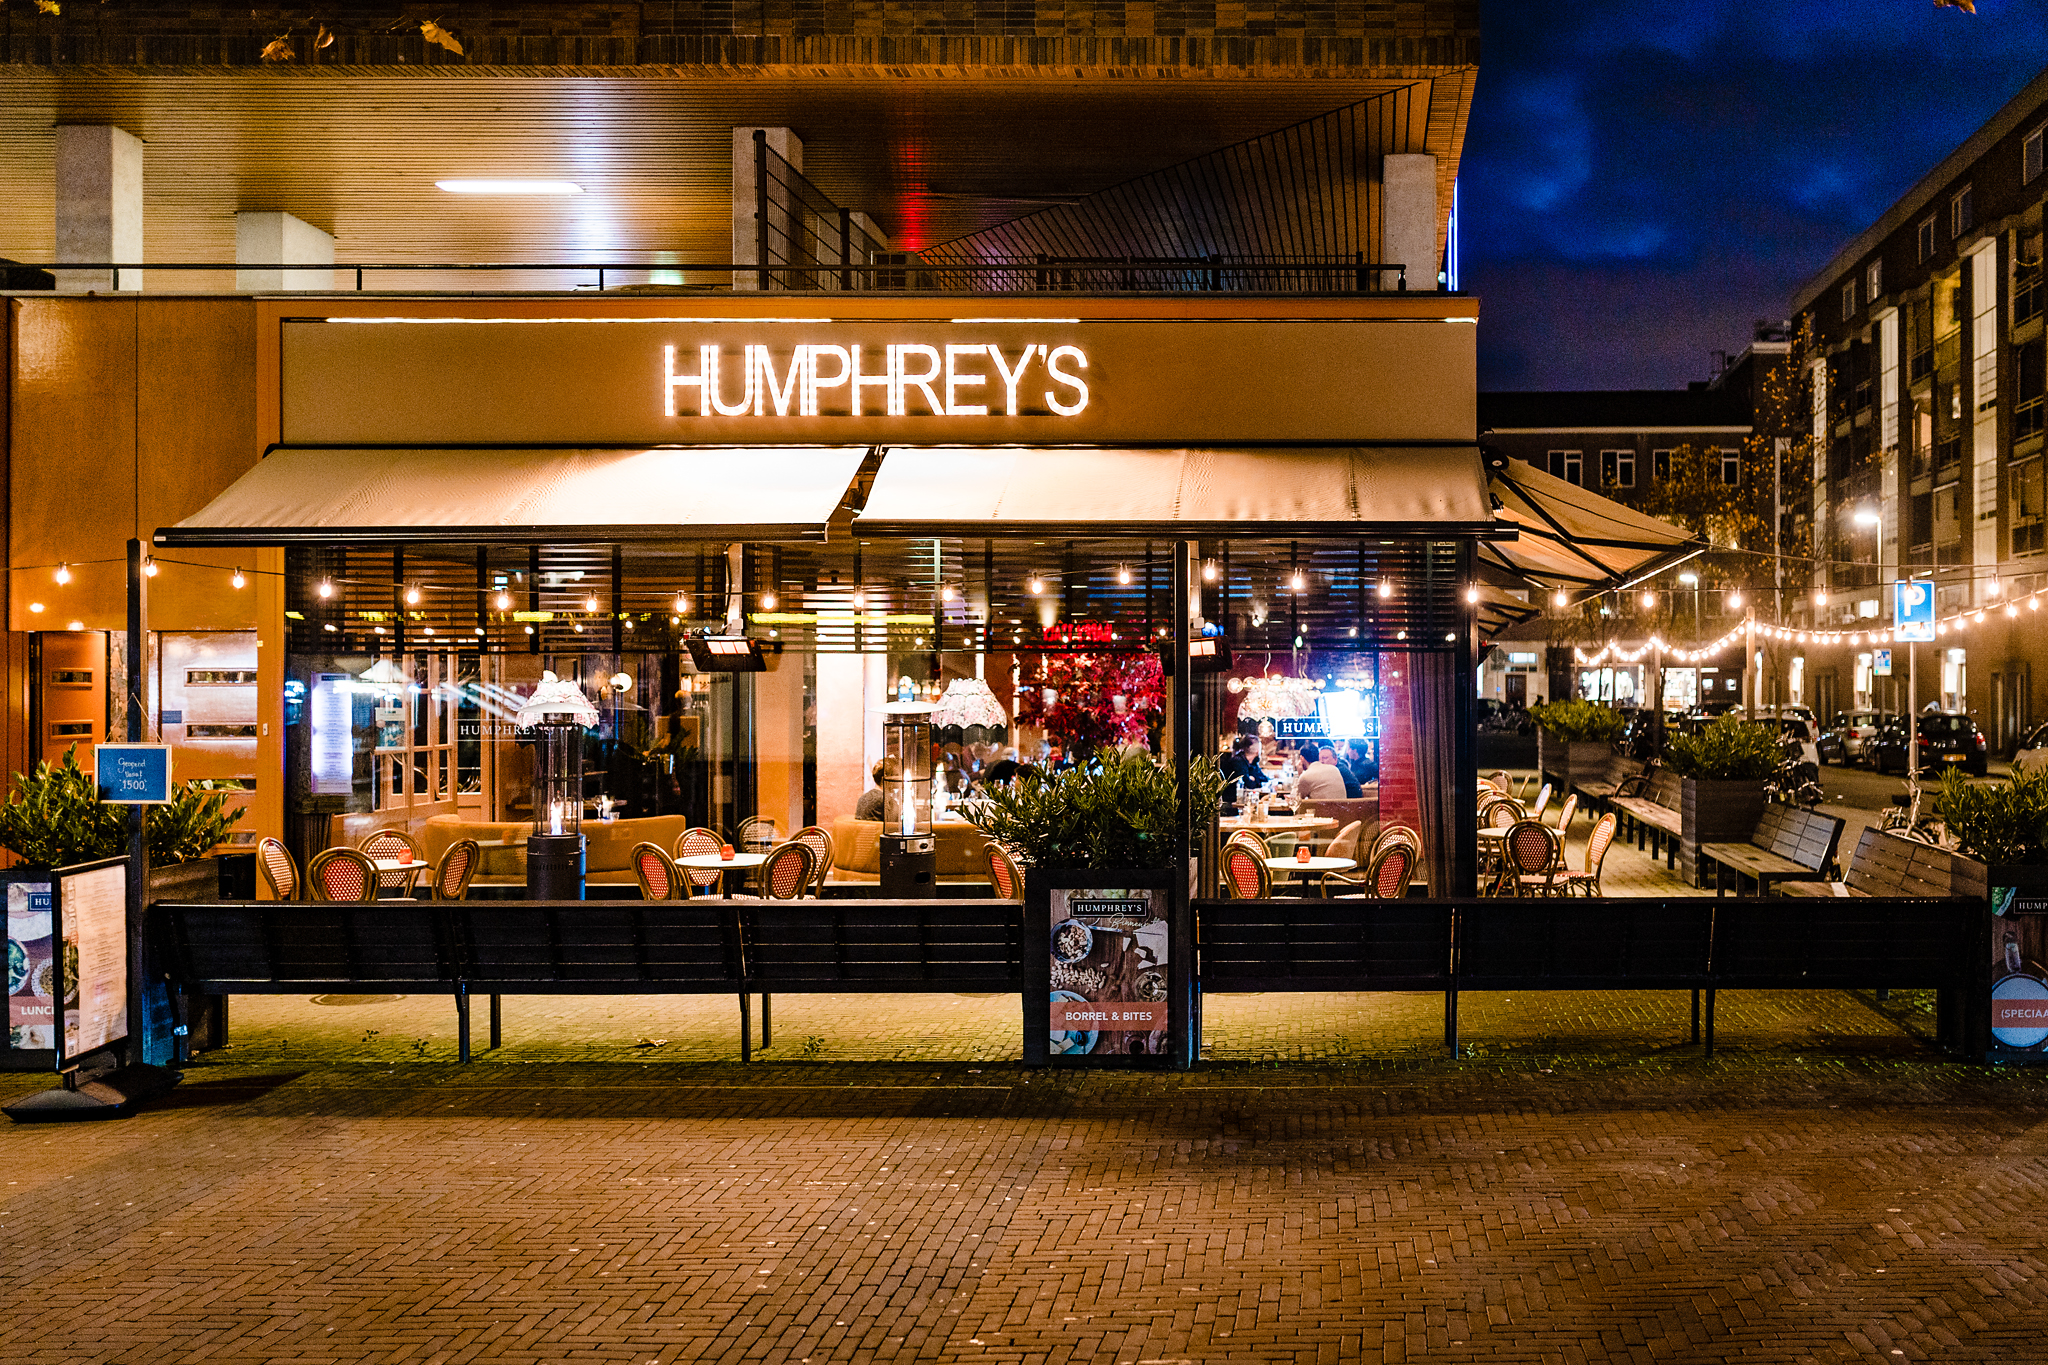 Humphreys restaurant Rotterdam Binnenrotte.jpg